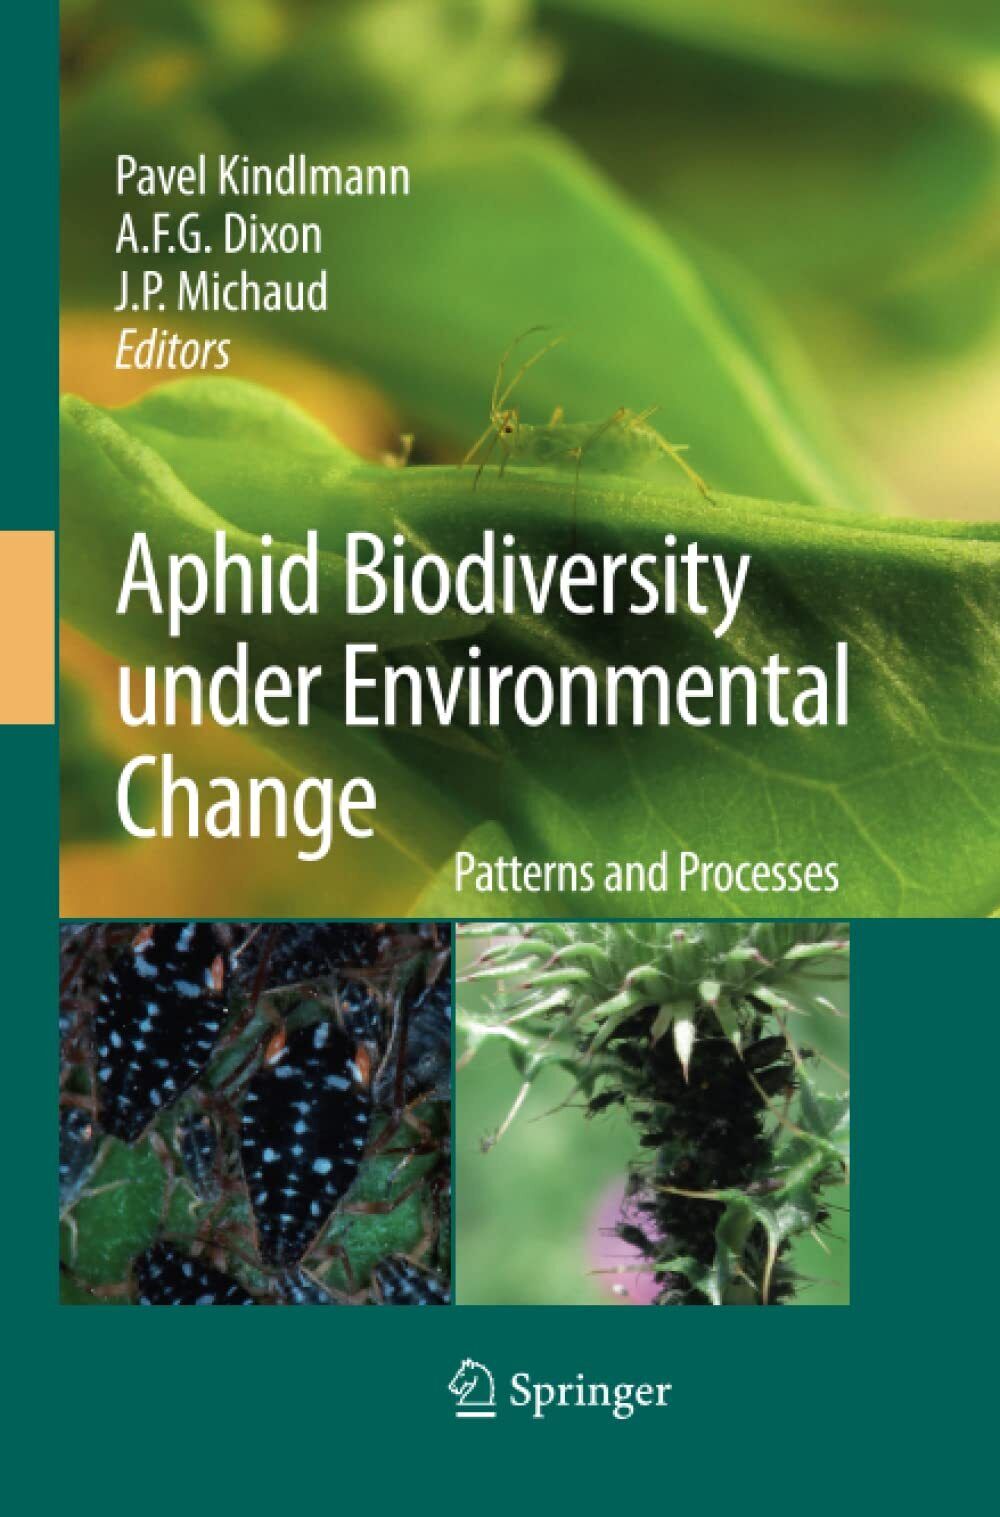 Aphid Biodiversity under Environmental Change - Pavel Kindlmann - Springer, 2014